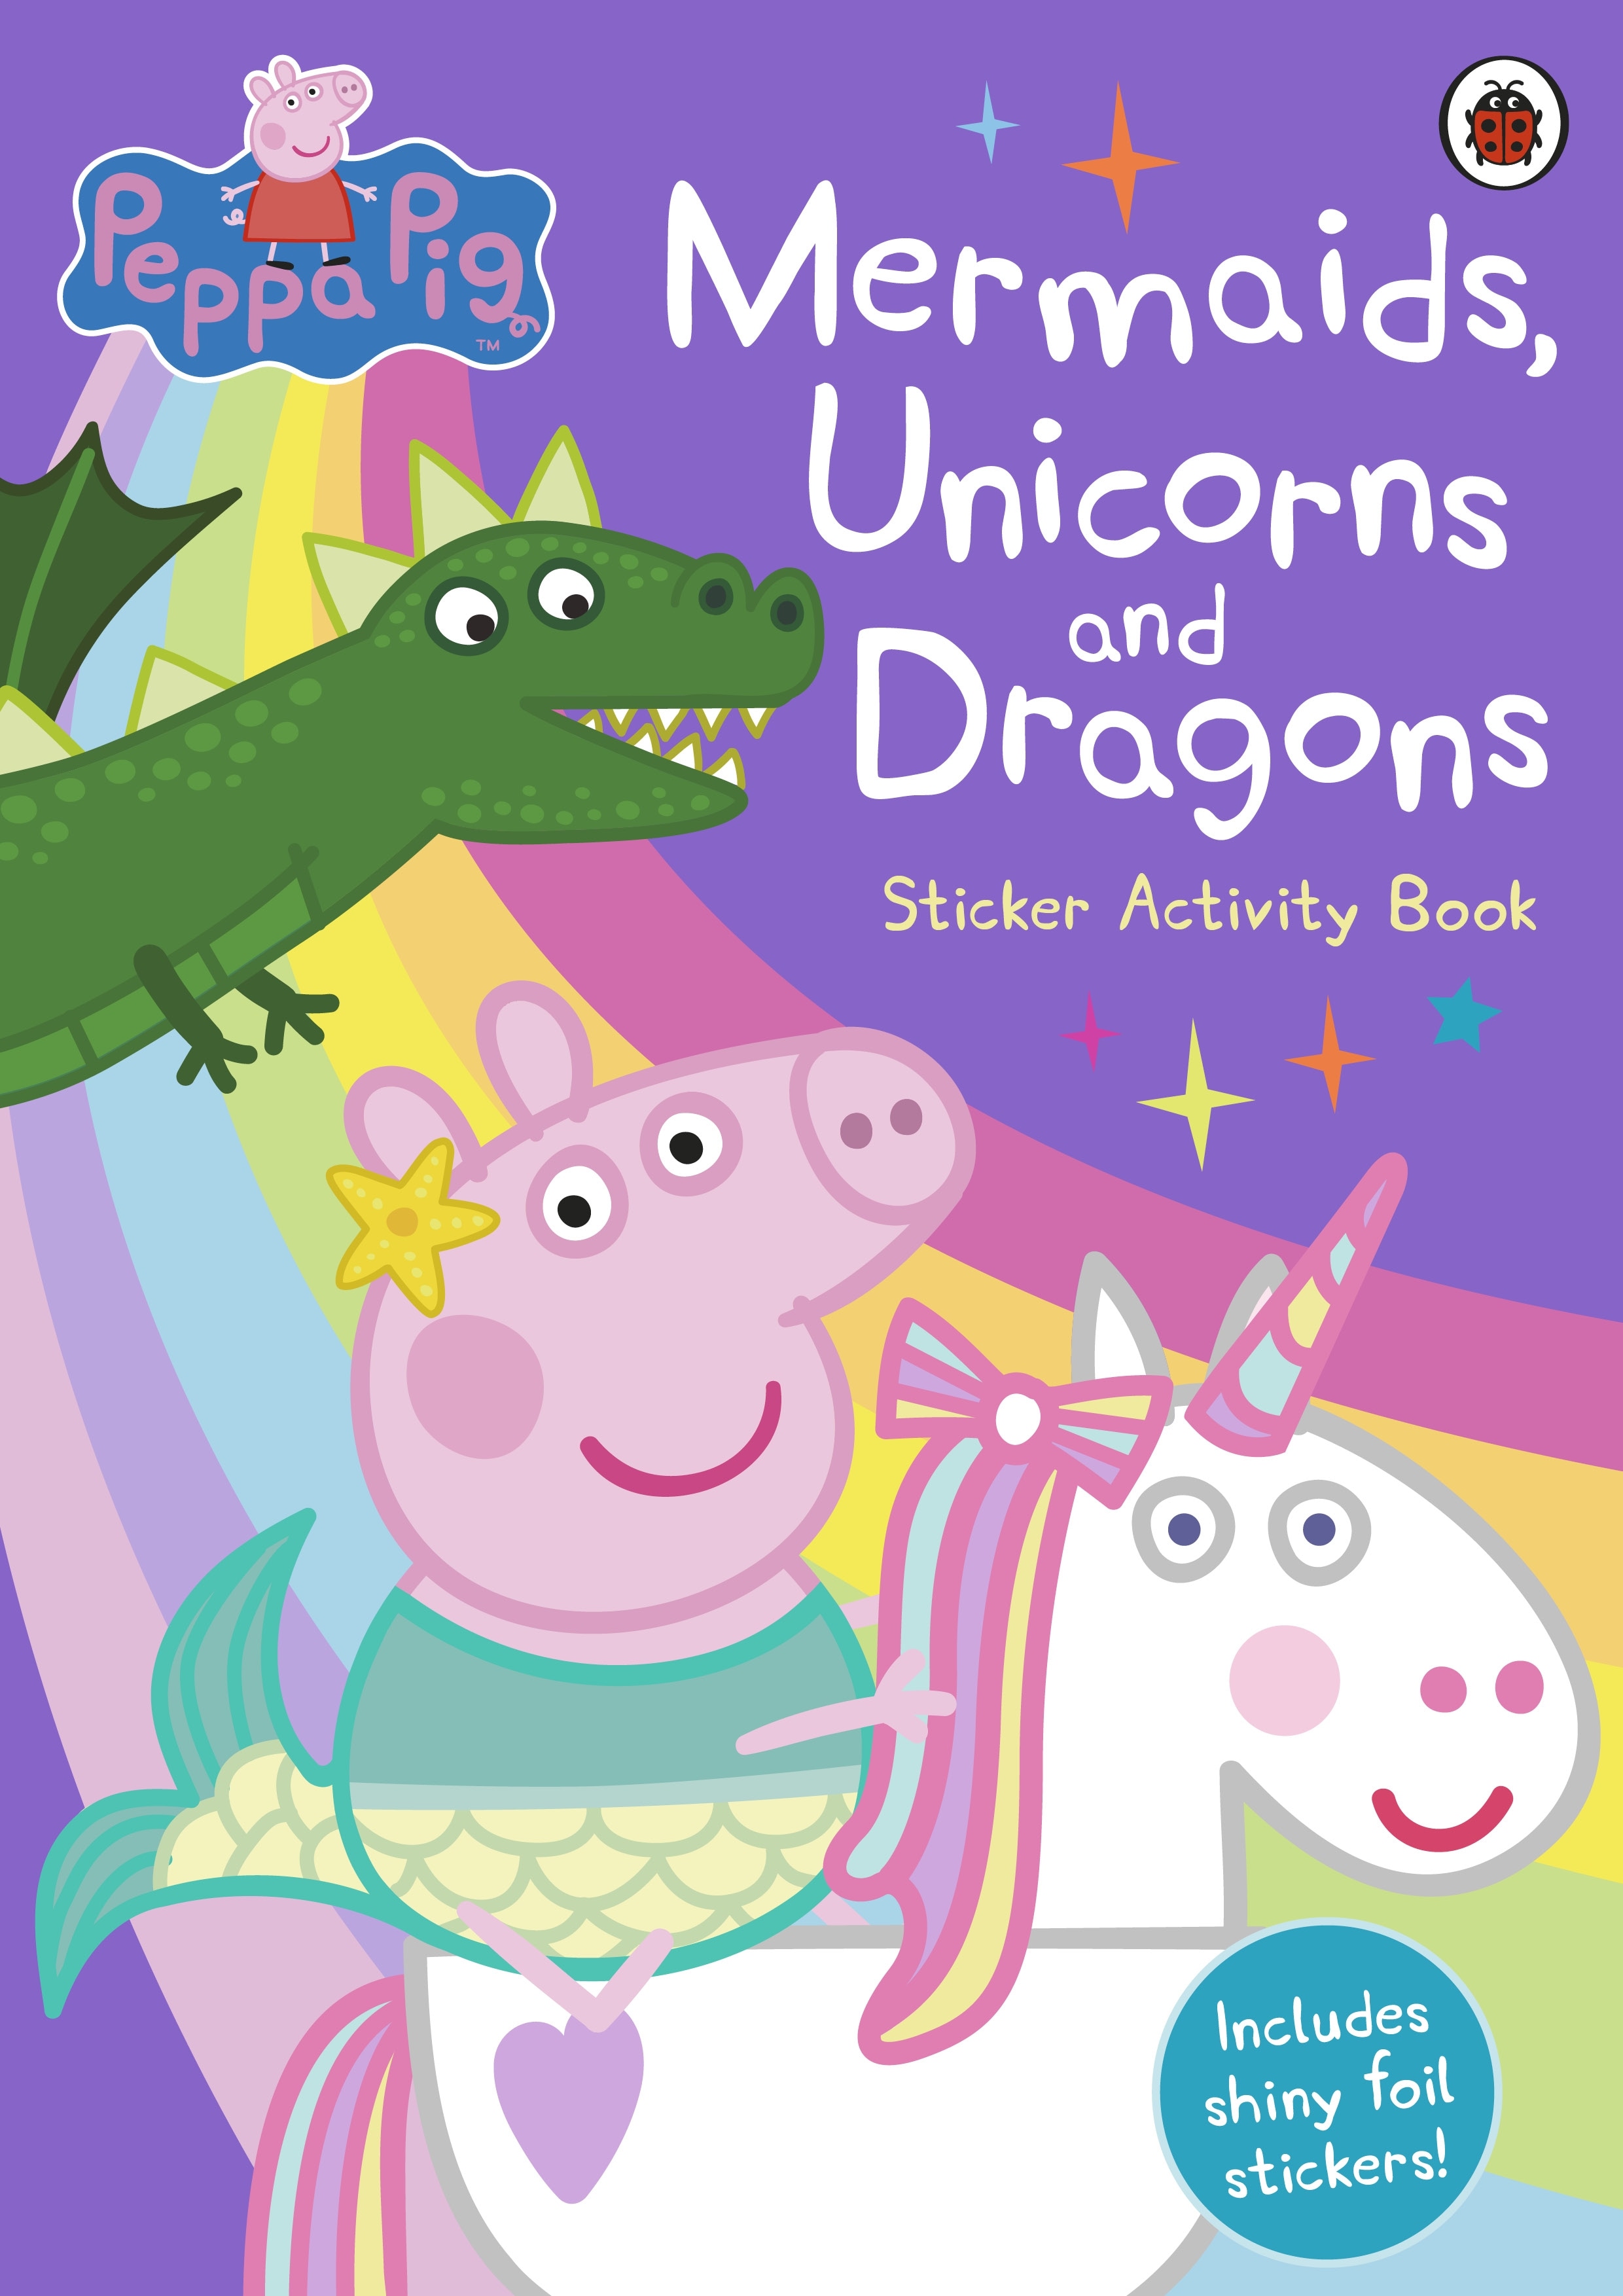 Book “Peppa Pig: Mermaids, Unicorns and Dragons Sticker Activity Book” by Peppa Pig — June 13, 2019